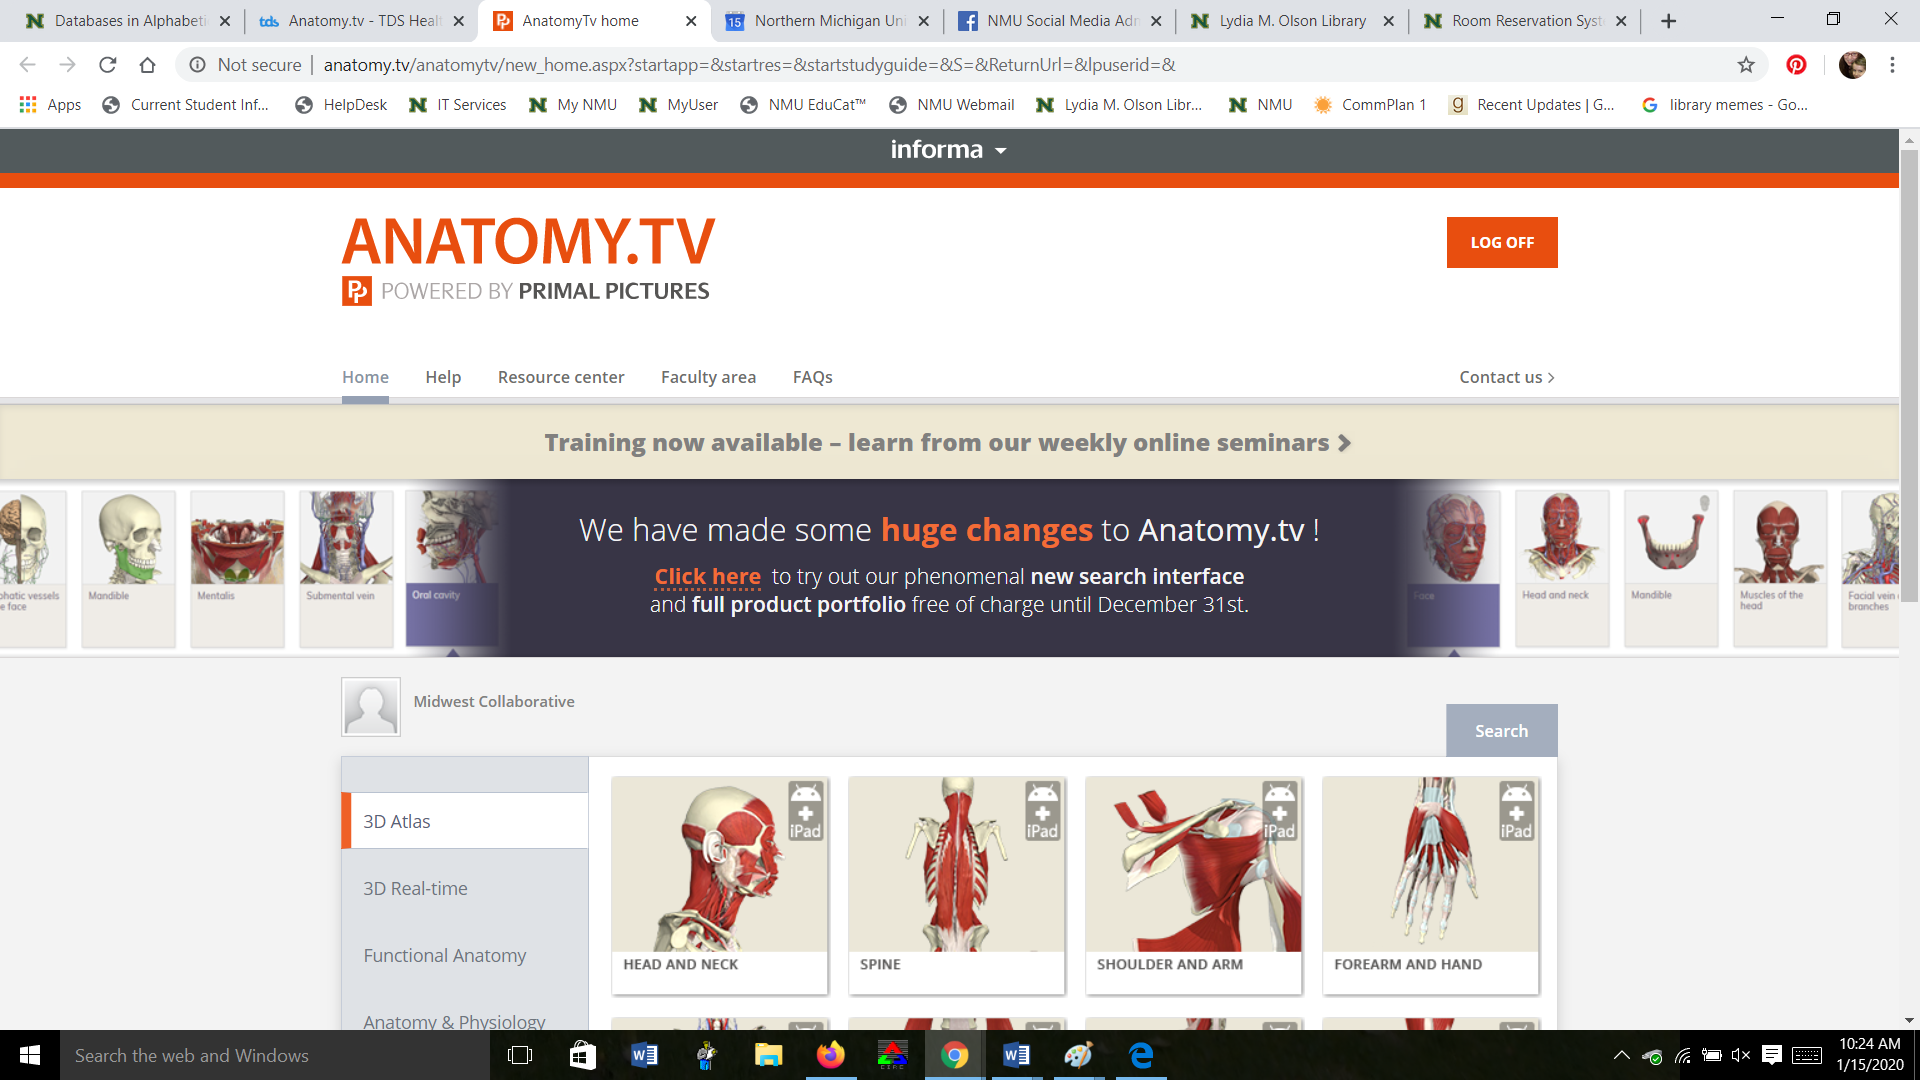 Anatomy.TV Main Web Page